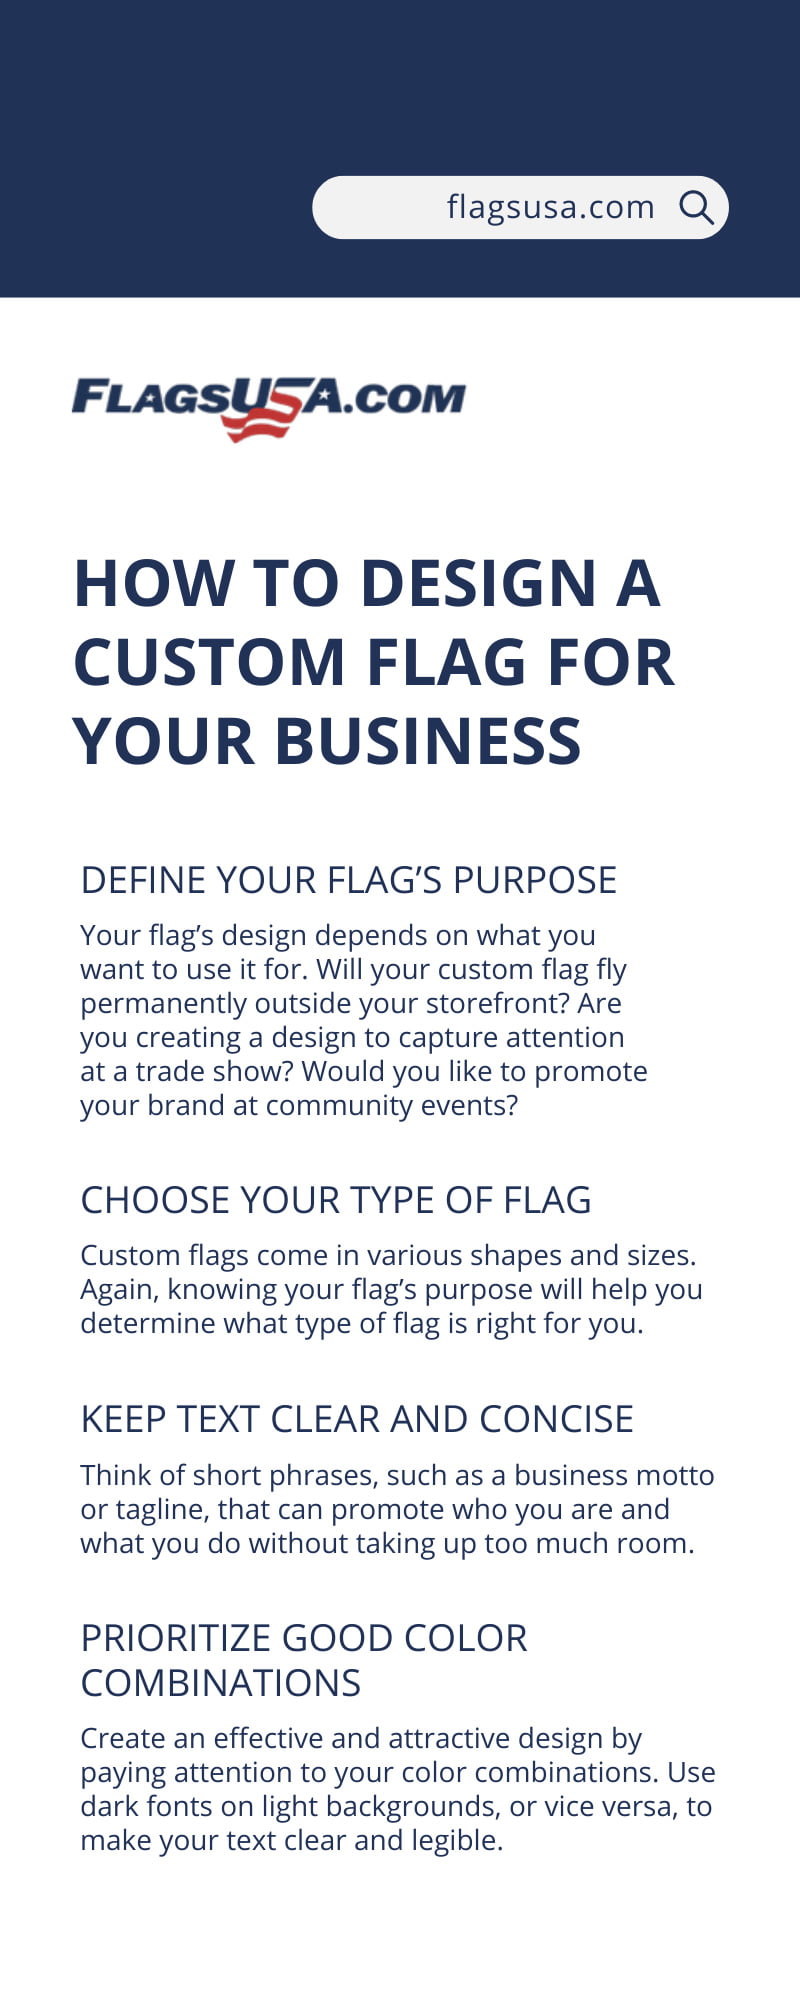 How to design a custom flag for your business